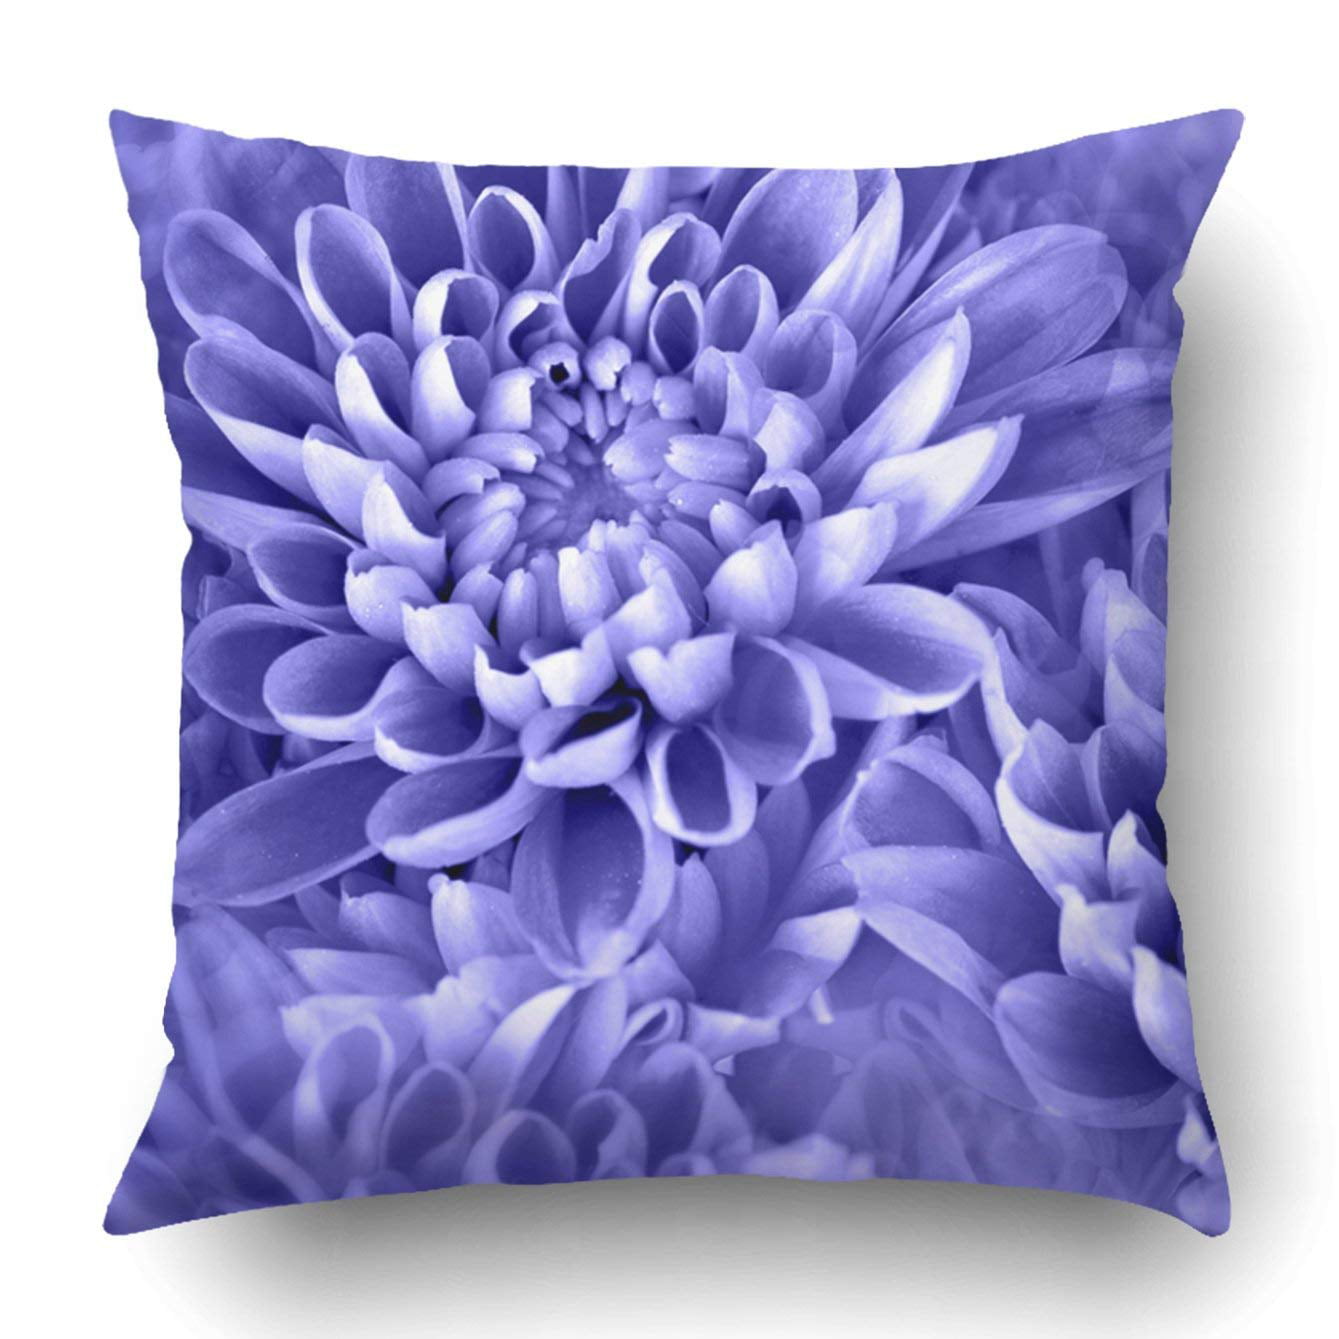 Newport-3D Flower Throw Pillow Covers Set of 2 Round  Decorative Pillowcase18" 